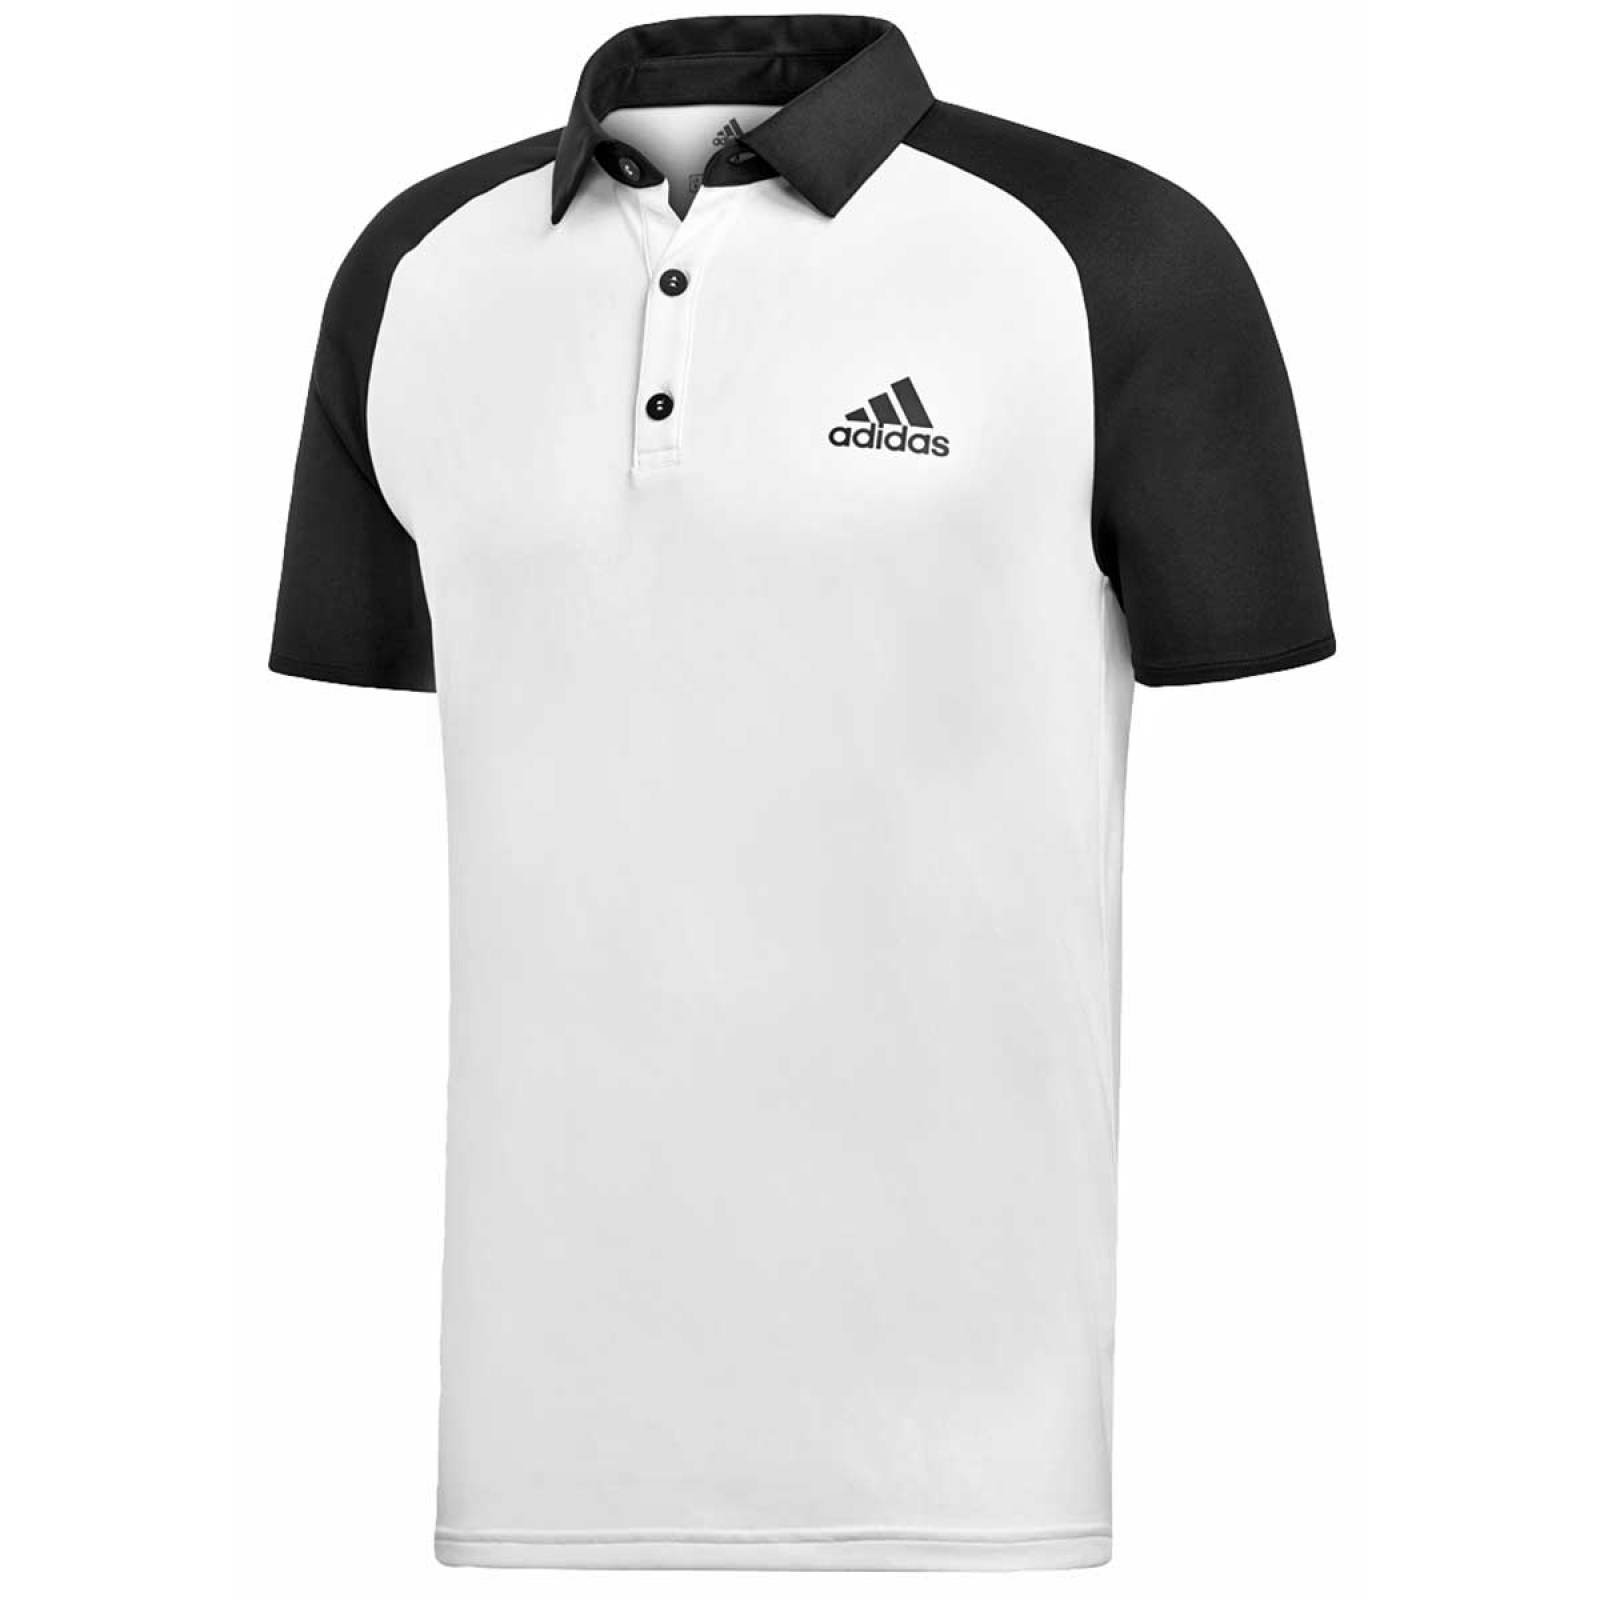 Adidas Polo Hombre Blanco negro club c/b polo